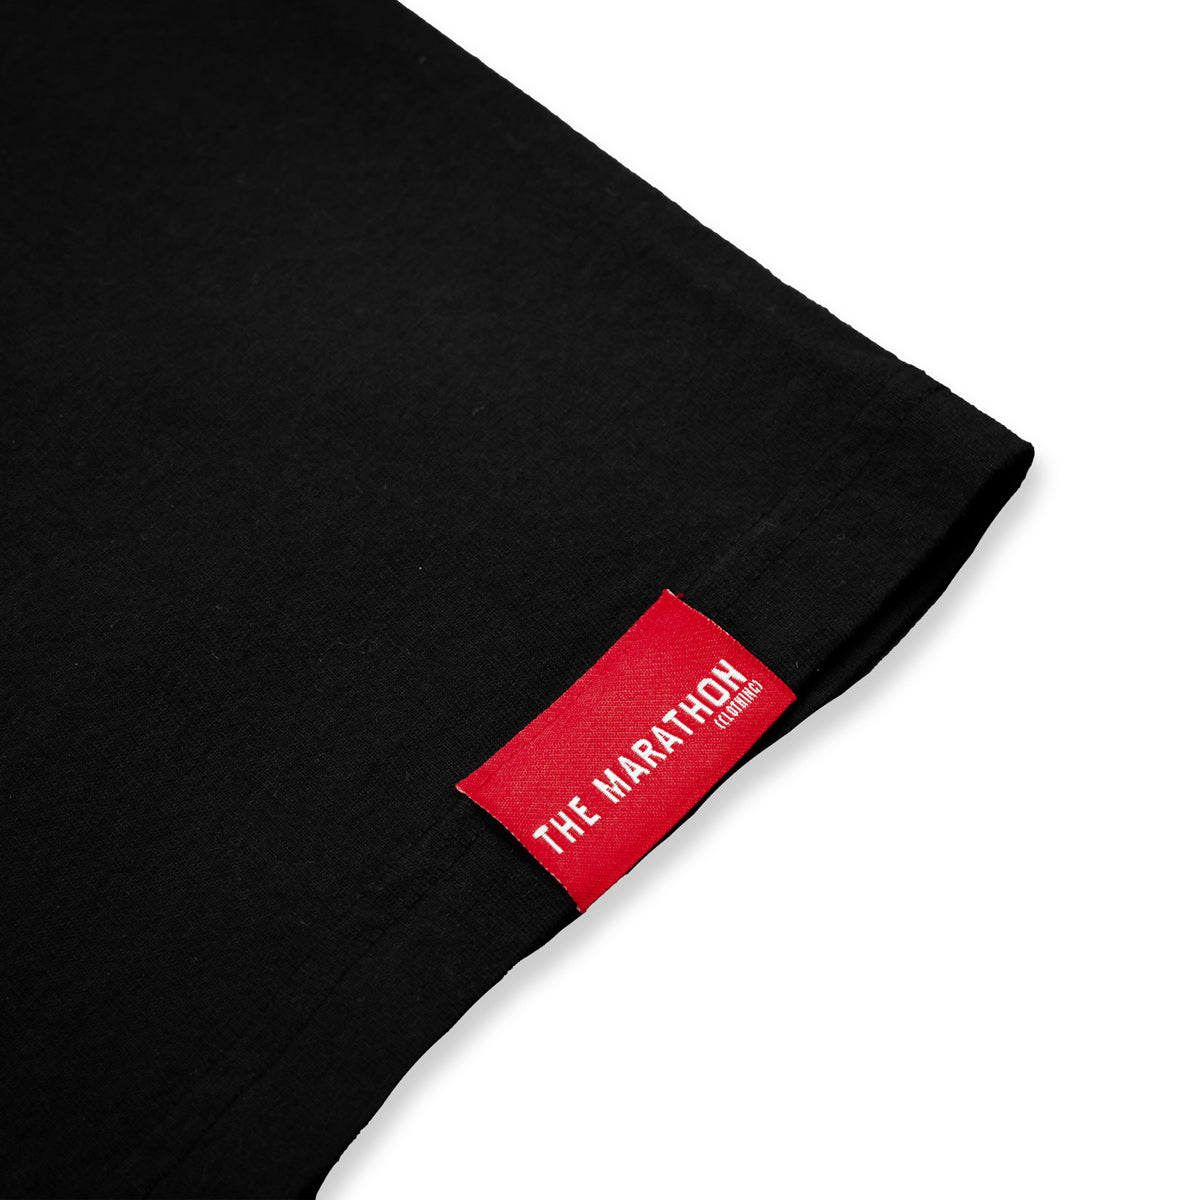 Mission Statement T-Shirt - Black - Woven Label